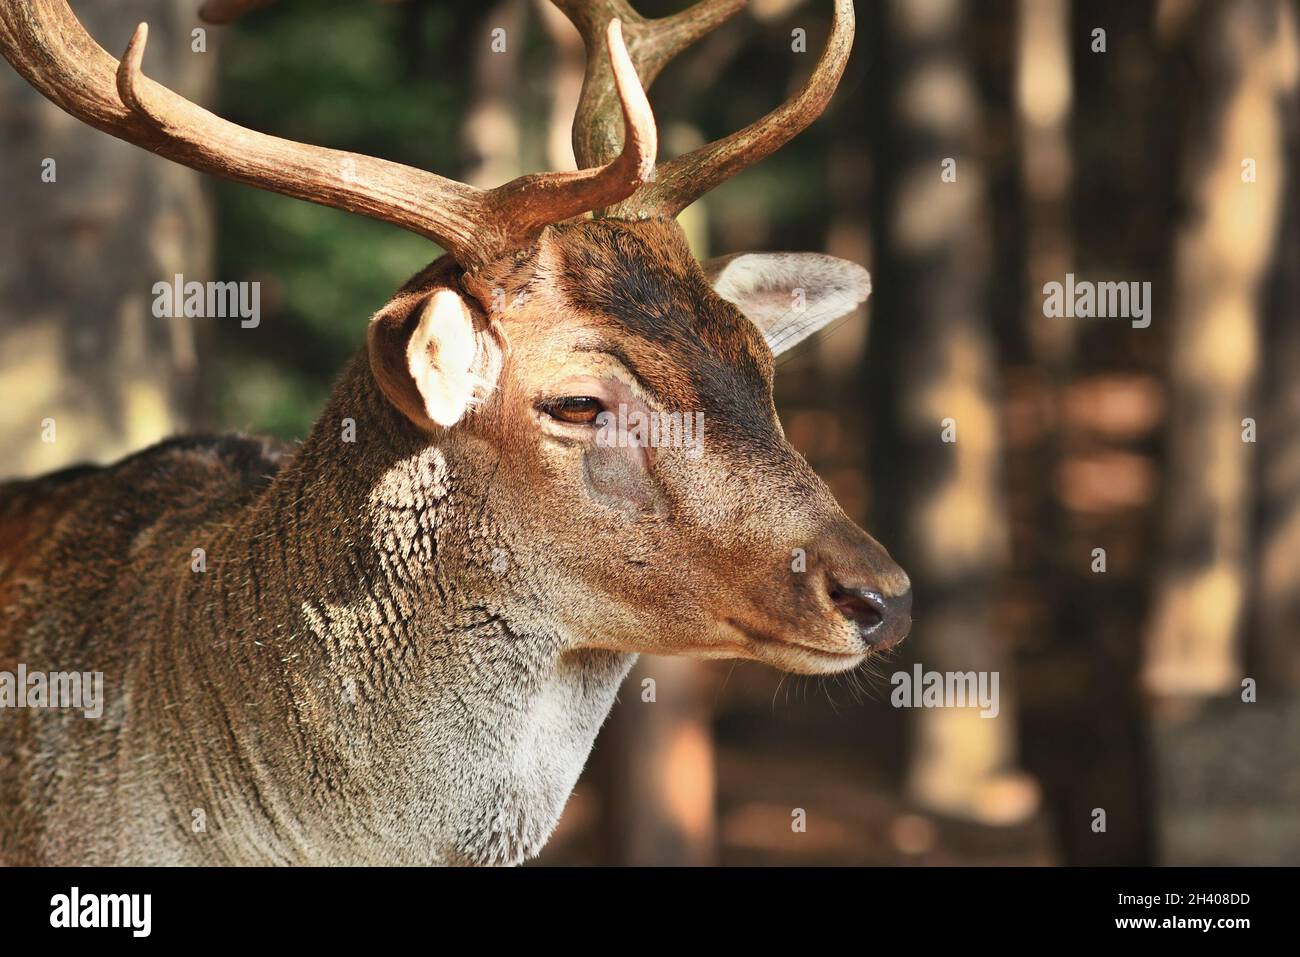 European fallow deer with sickness around eye showing bald furless patch Stock Photo